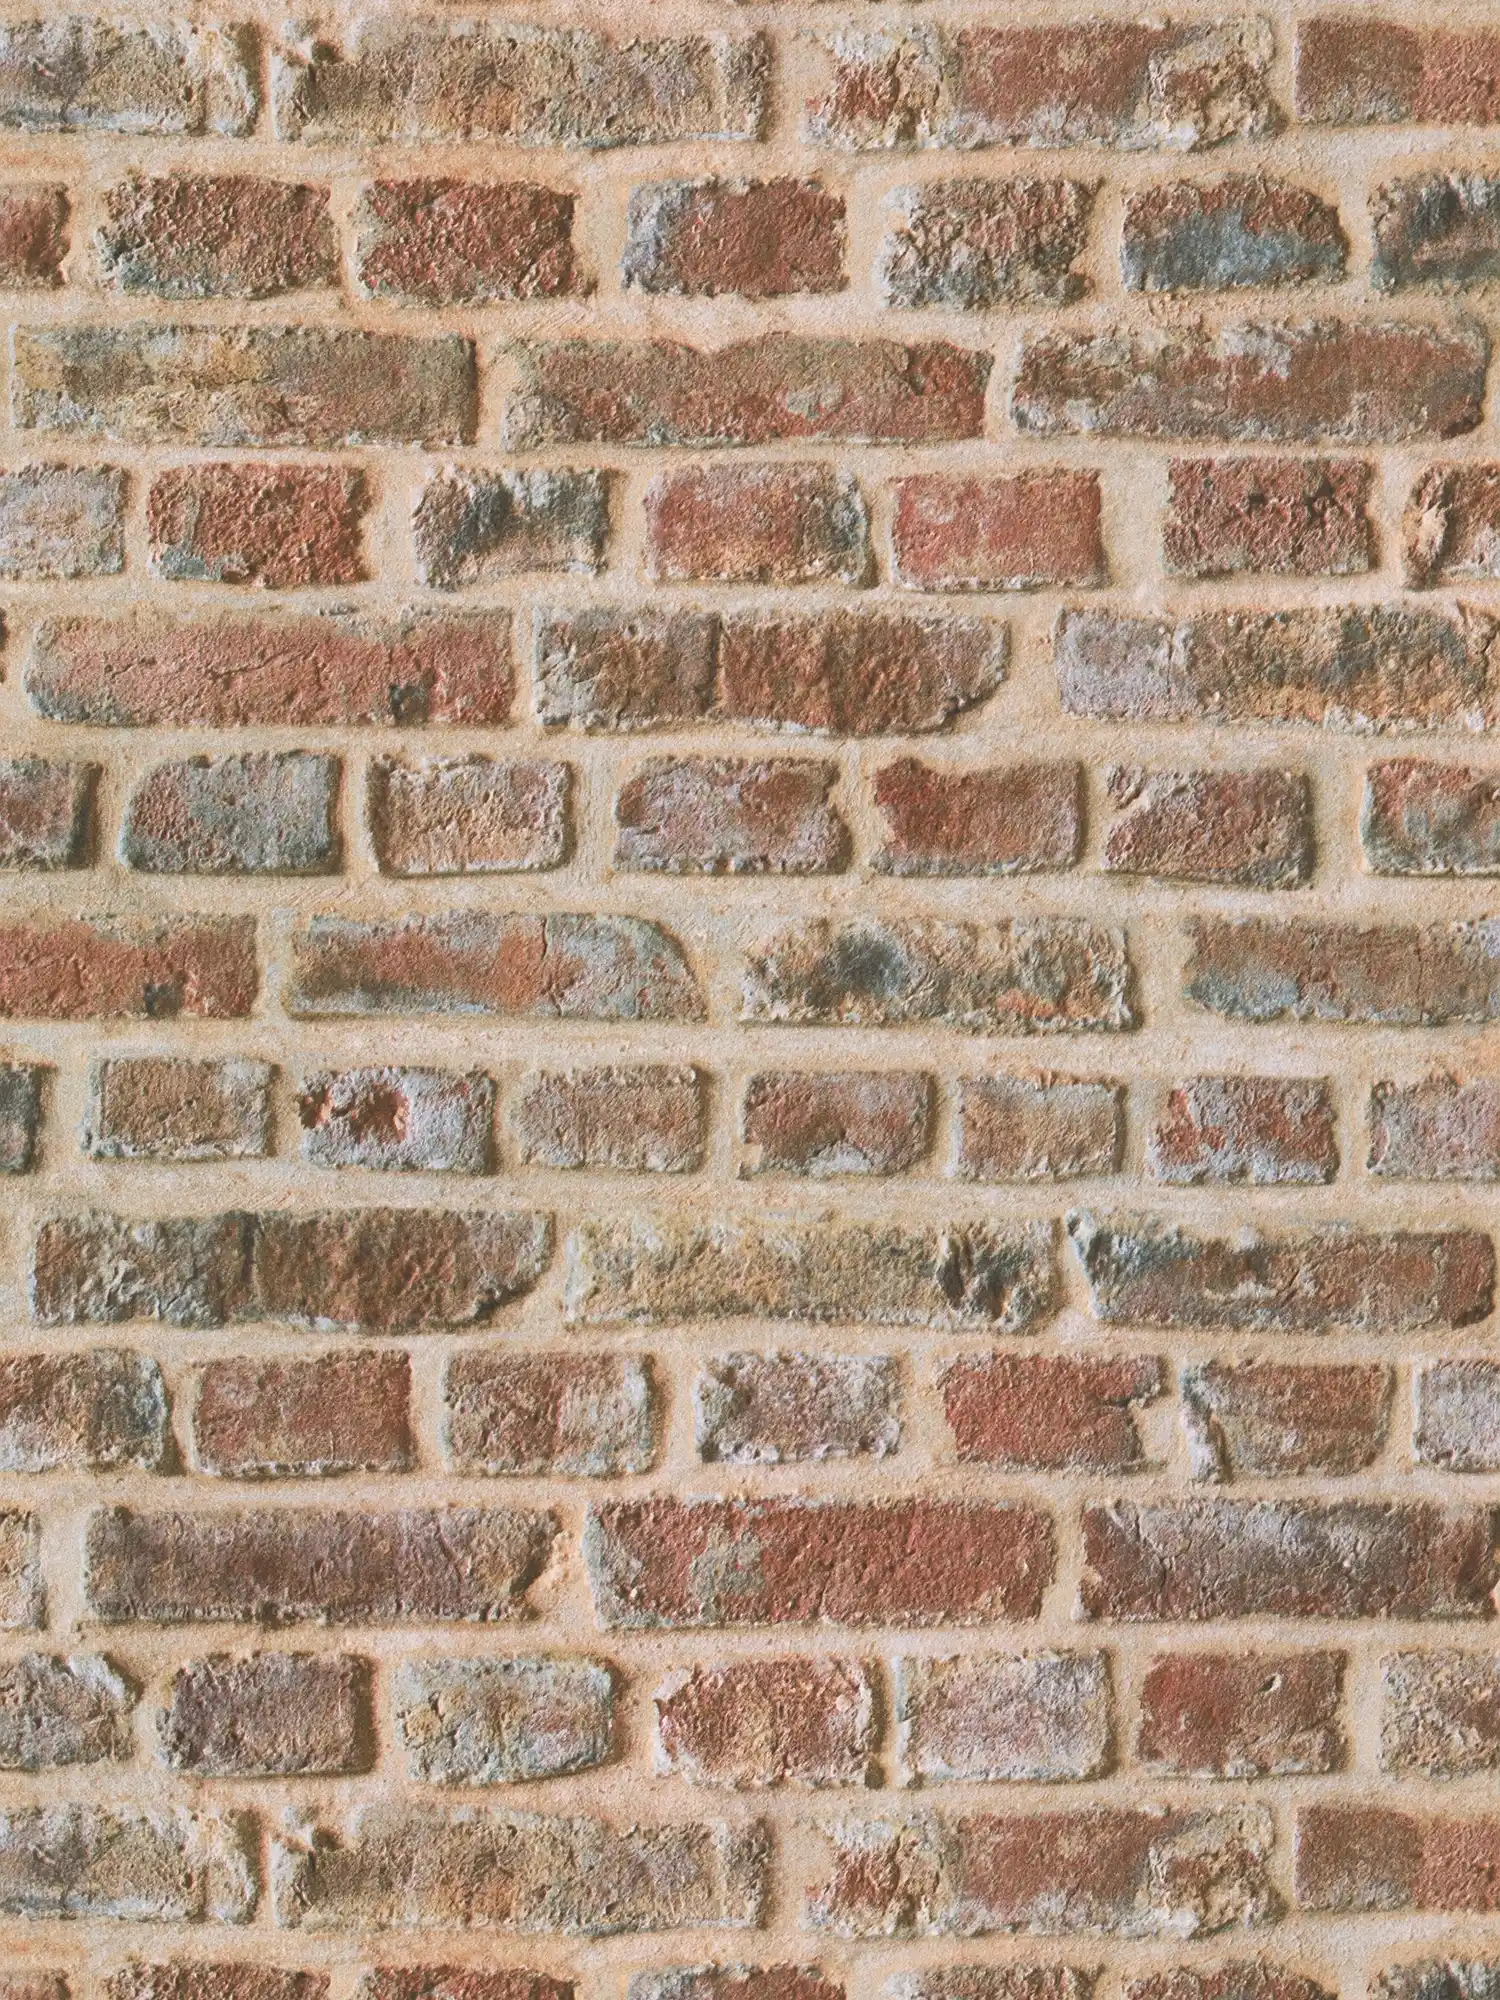 Self-adhesive wallpaper | 3D stone brick look wall - red, brown
